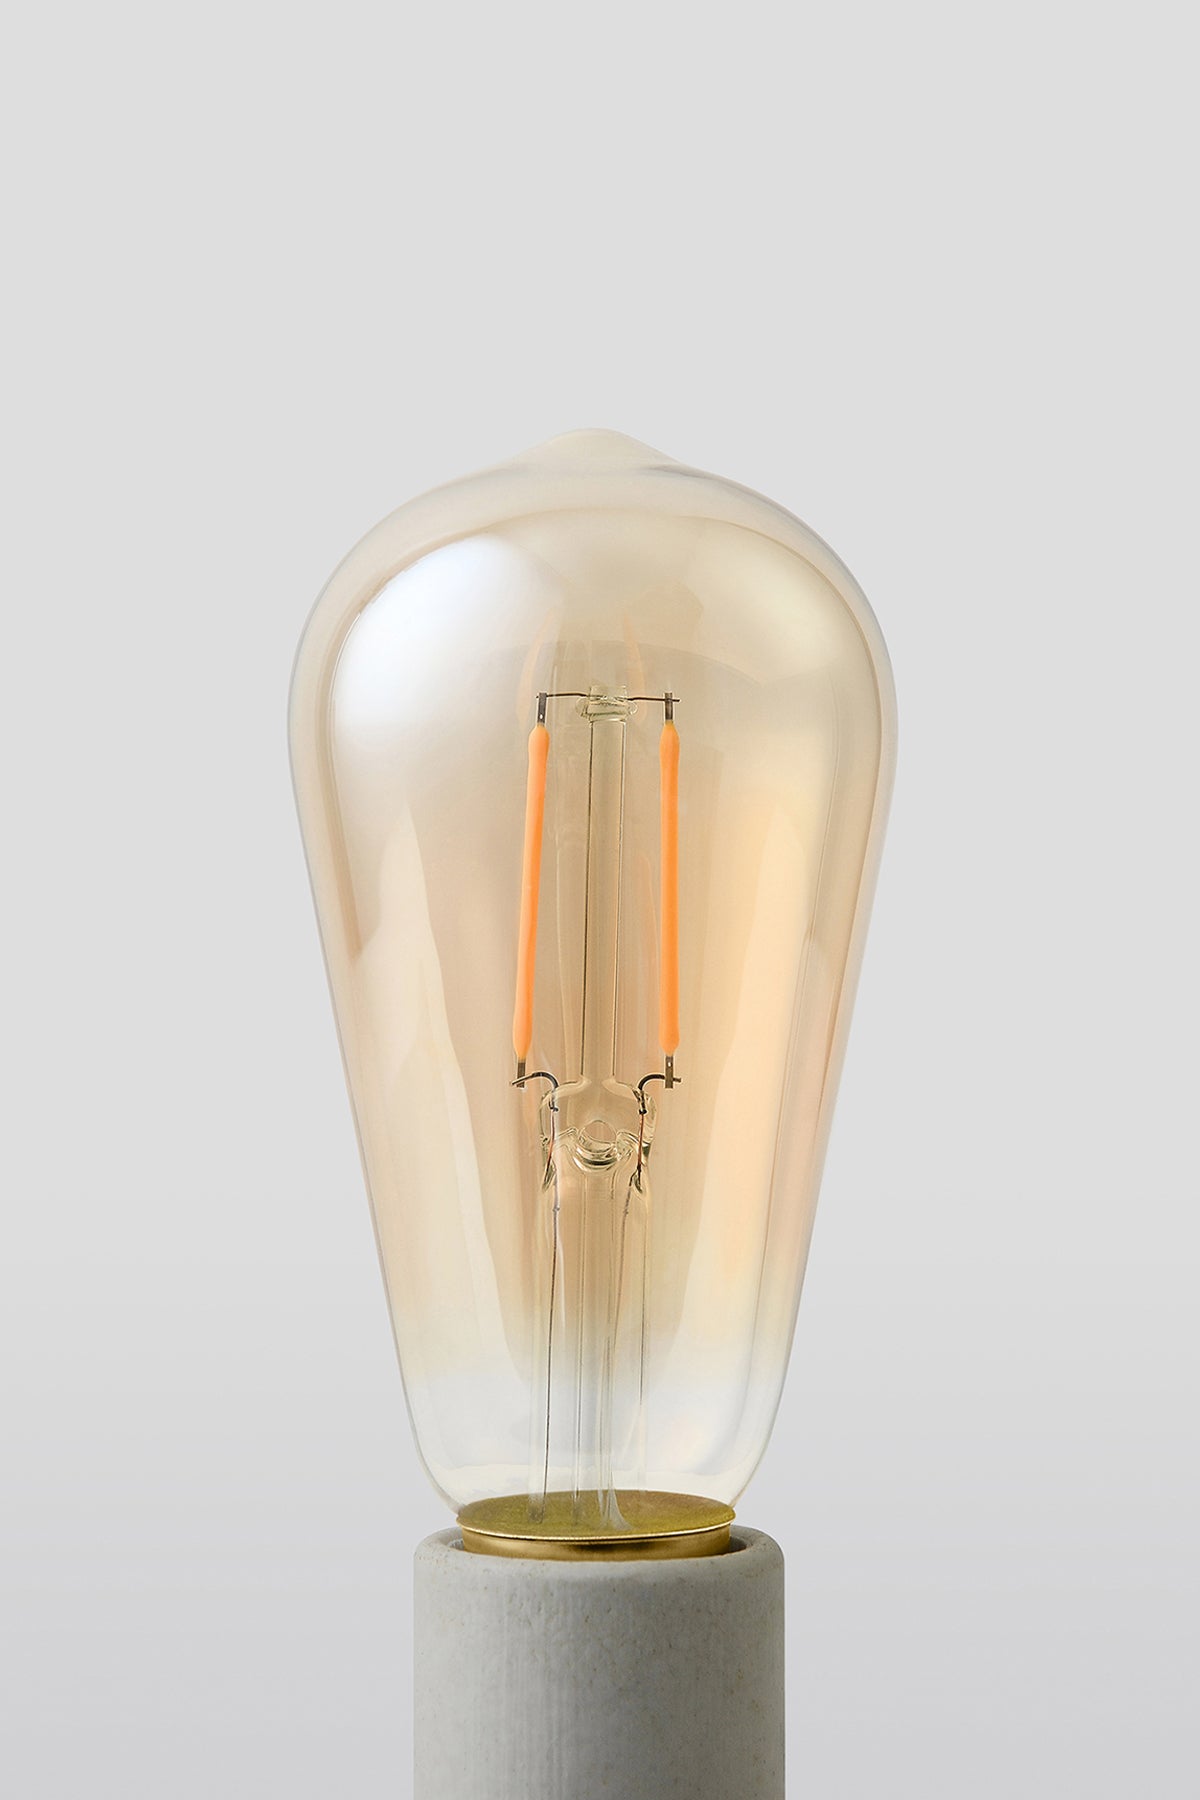 Modern ST19 LED light bulb with warm vintage Edison style glow